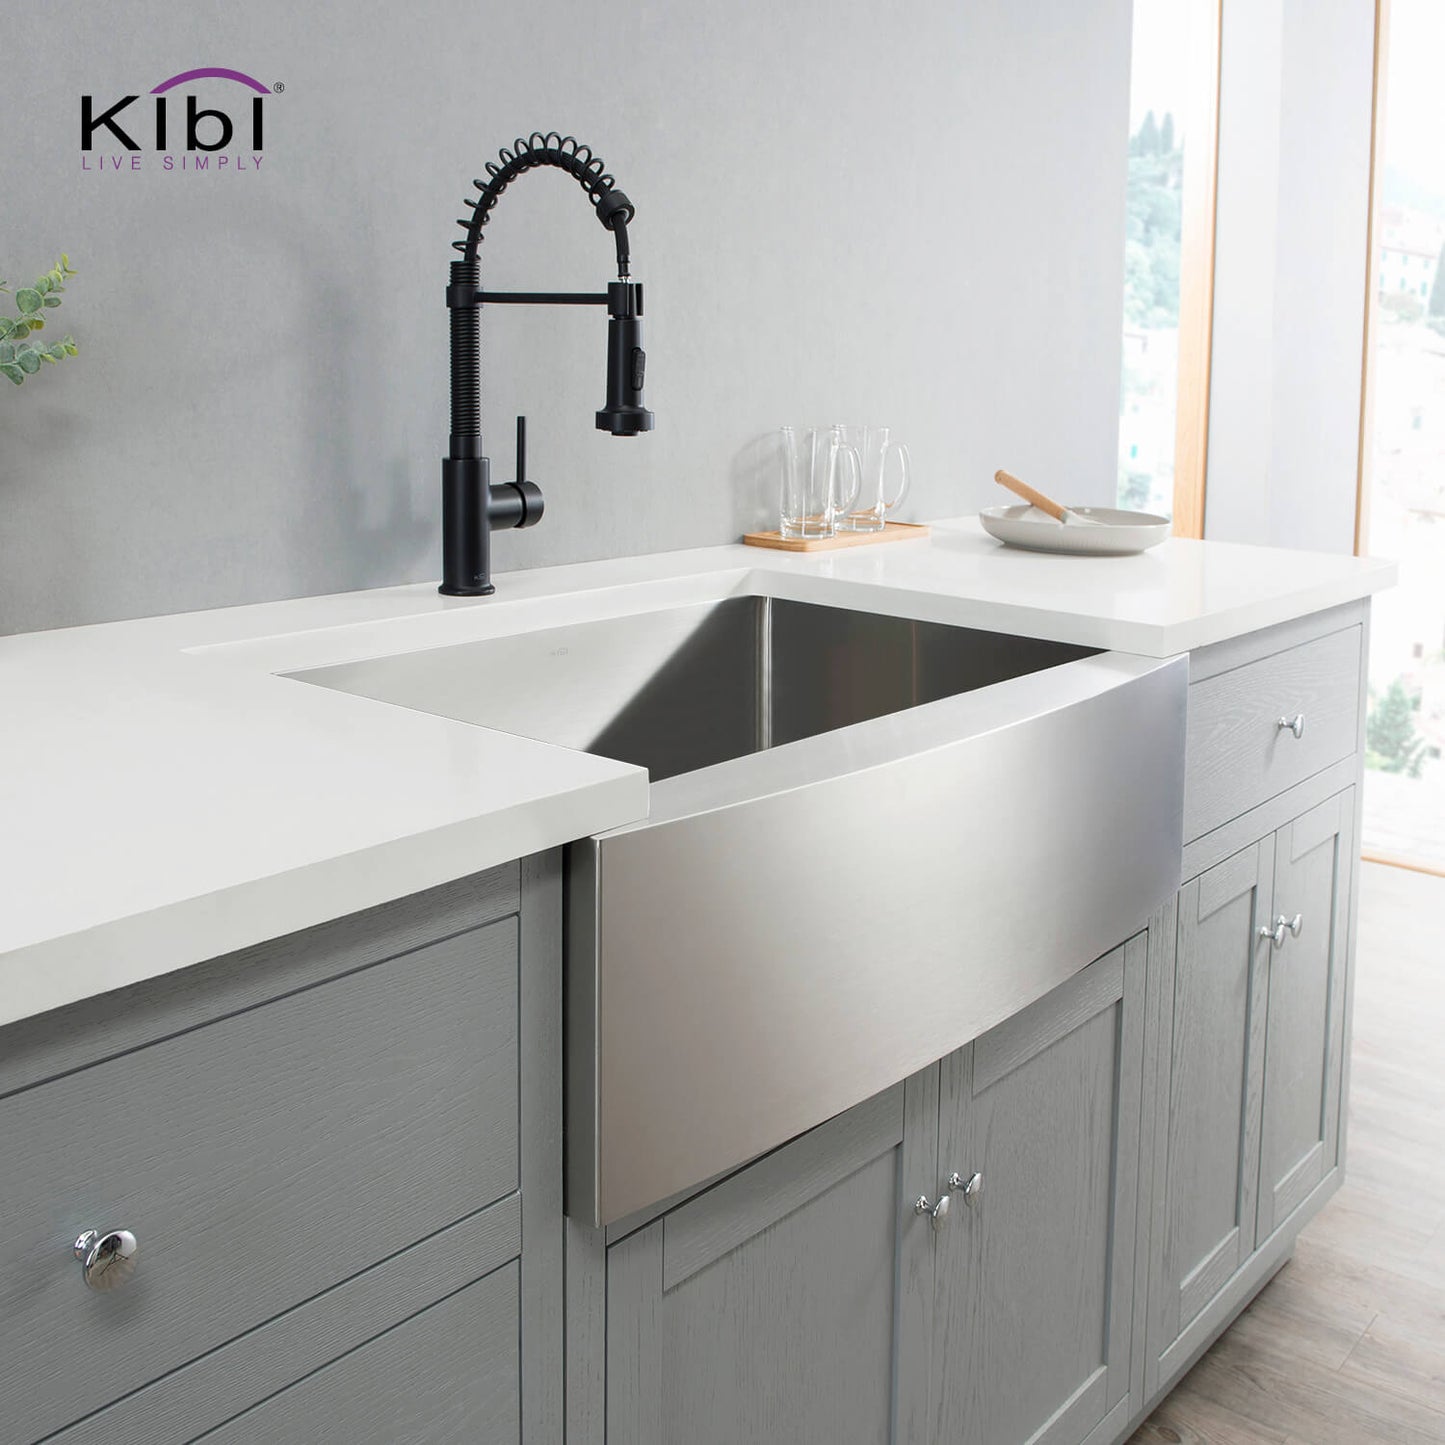 Kibi 36" x 22" x 10" Handcrafted Single Bowl Farmhouse Apron Kitchen Sink With Satin Finish